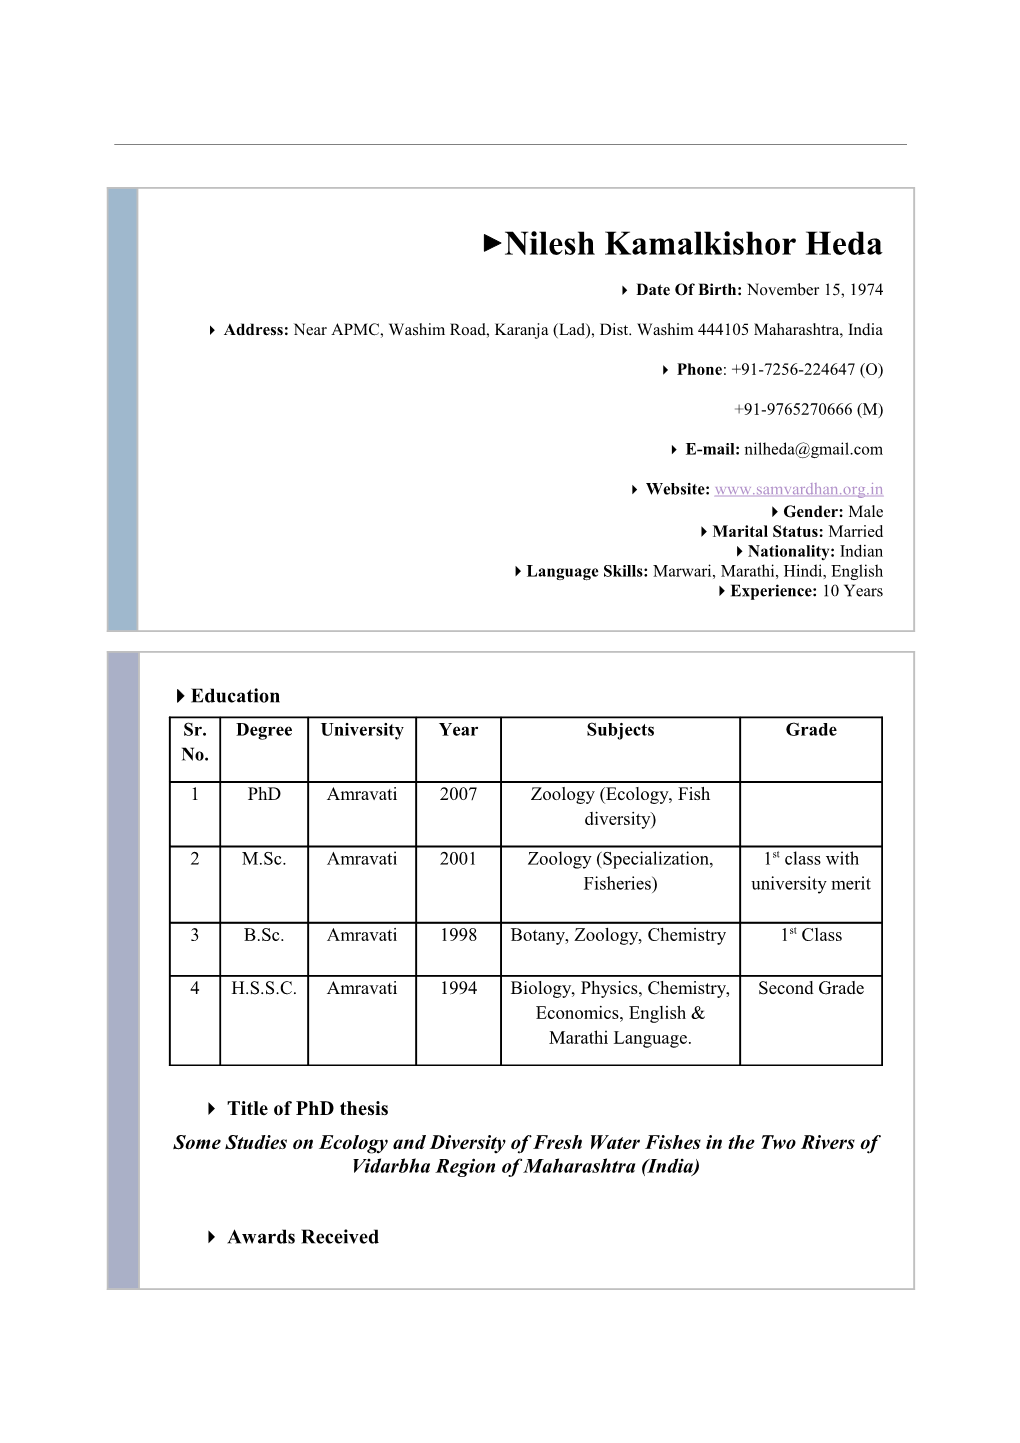 Resume: Nilesh Kamalkishor Heda